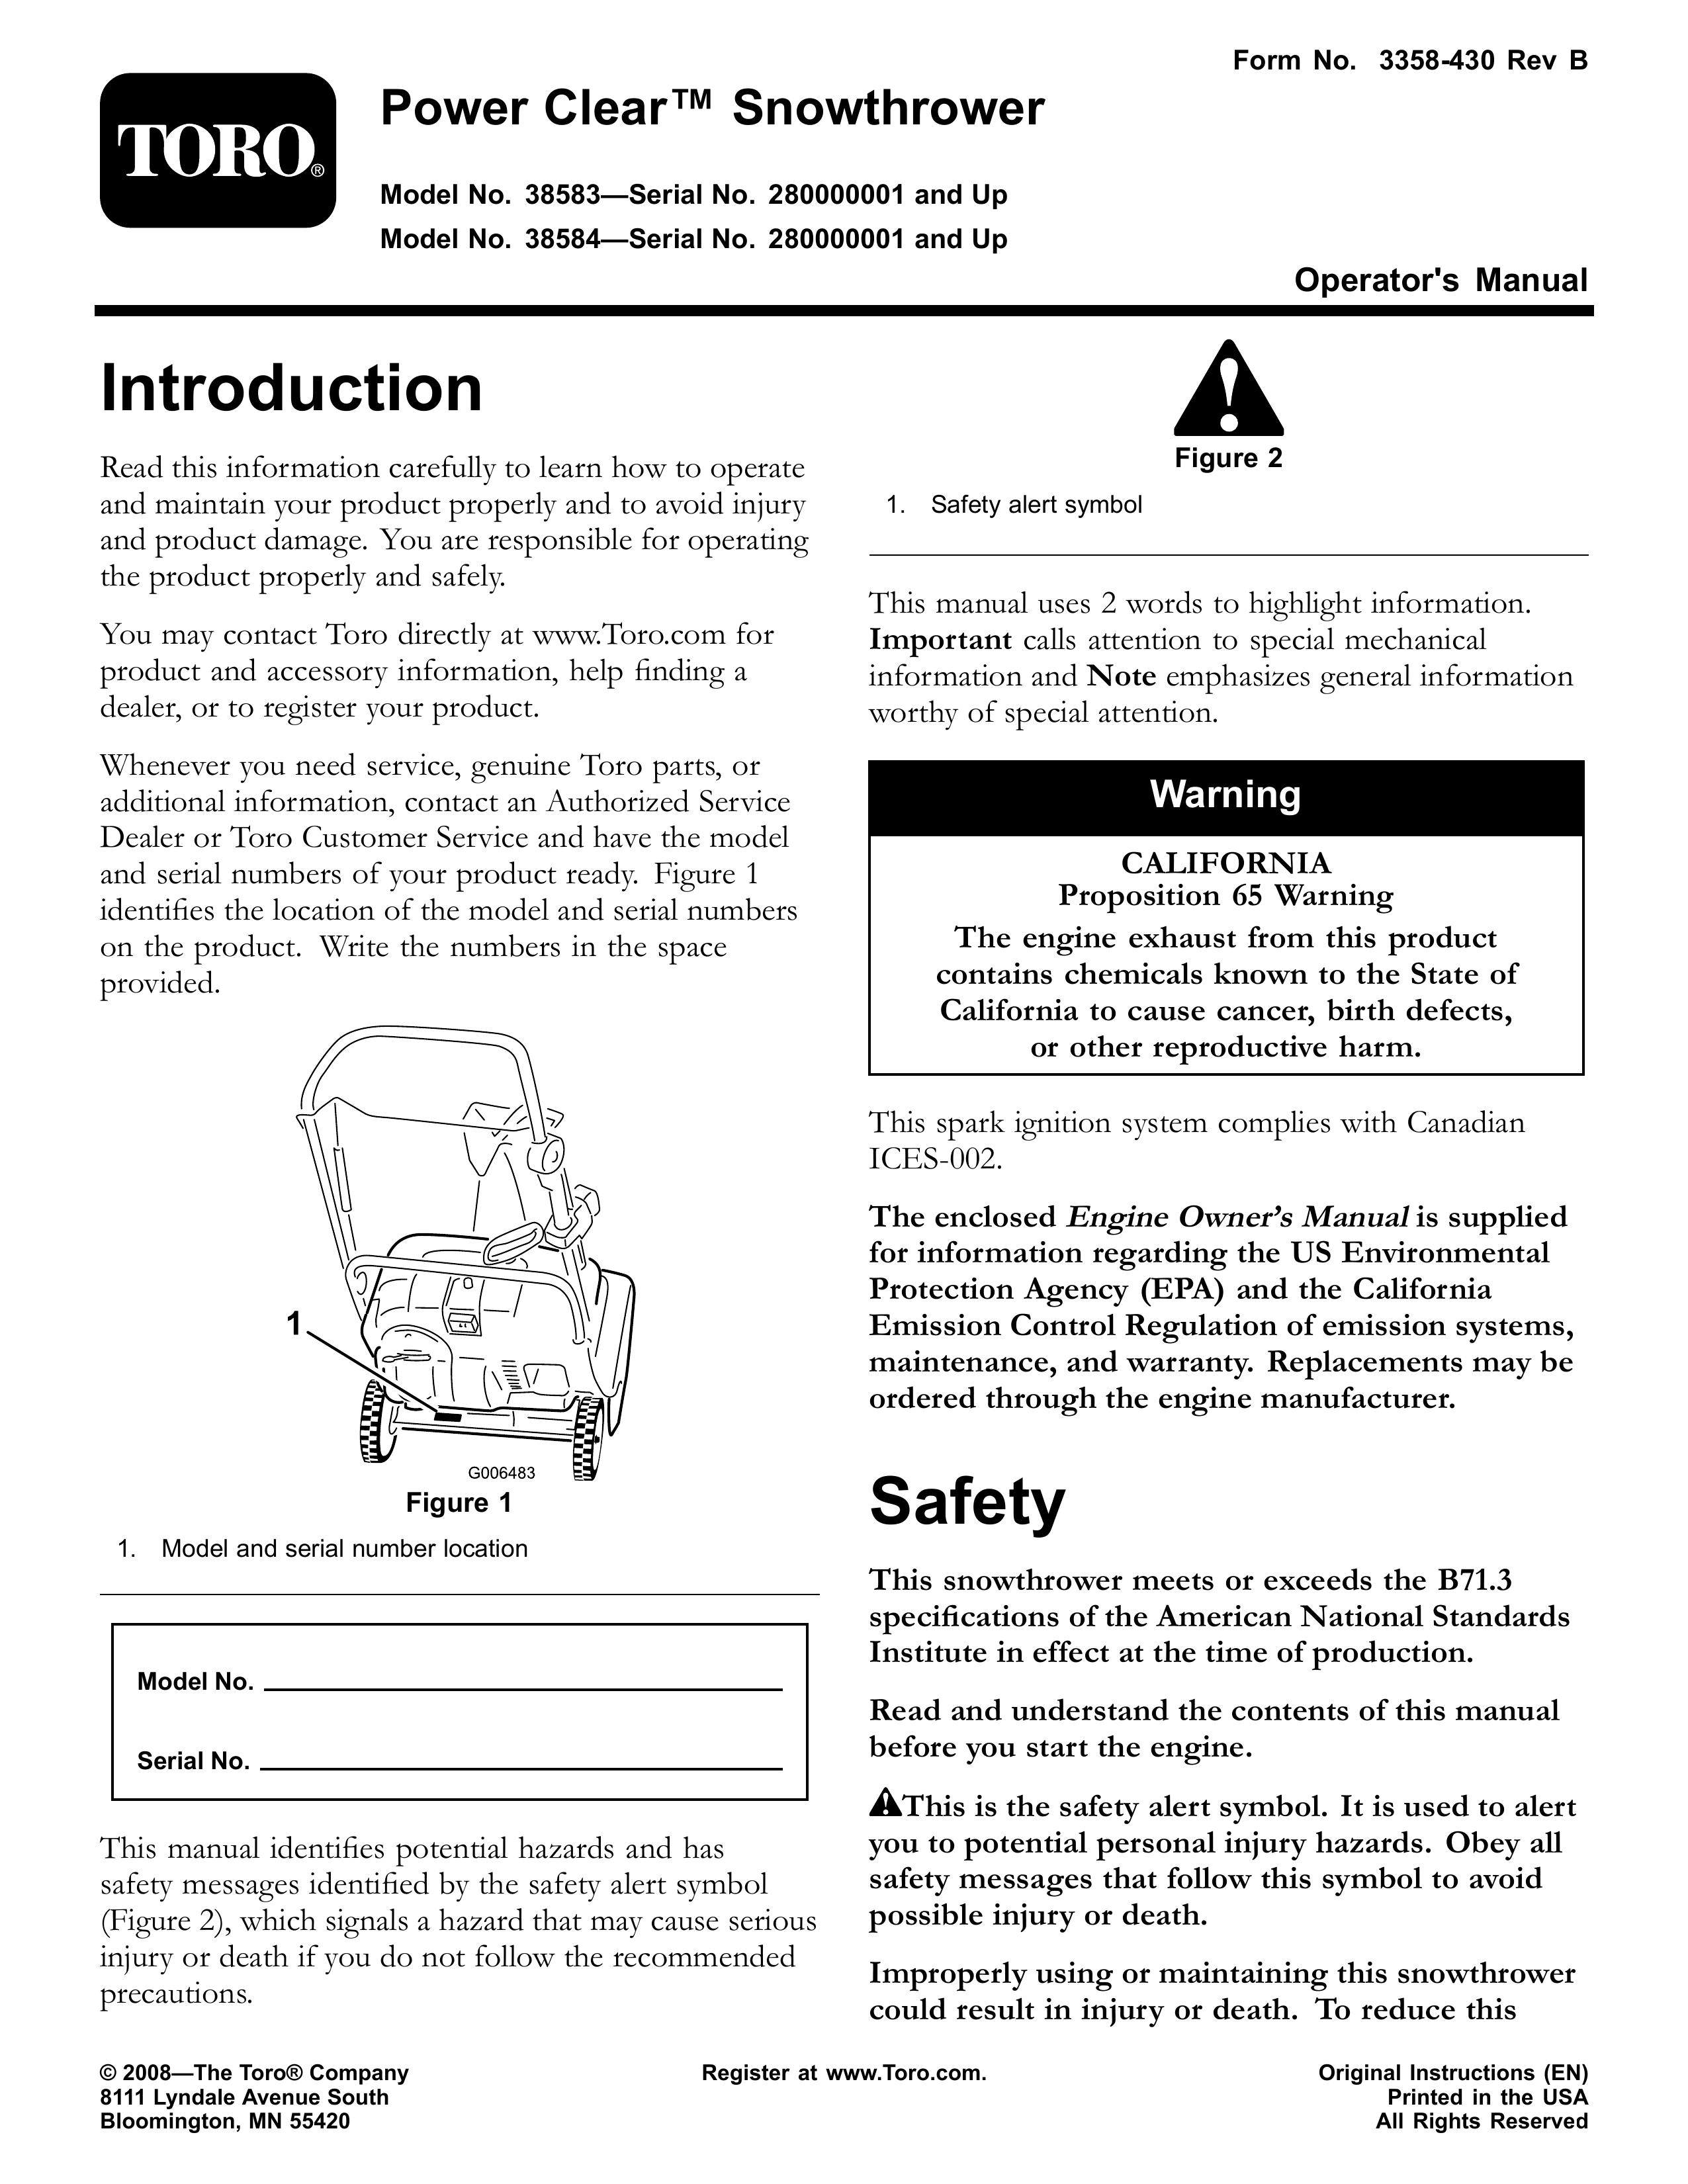 Toro 38584 Snow Blower User Manual